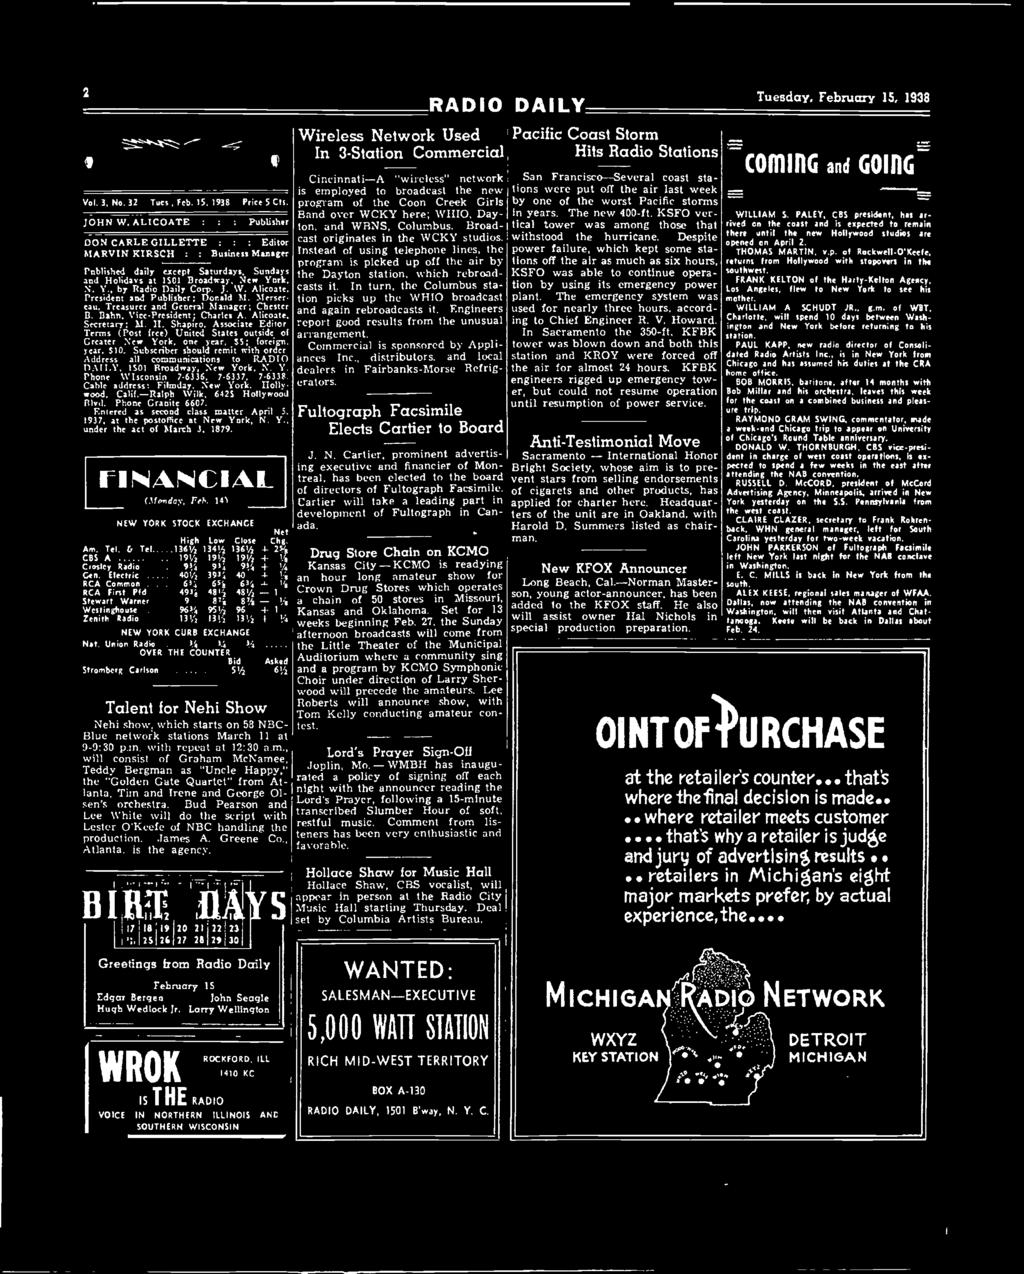 9671 51 2 Val. 3. No. 32 Tuts Feb. 15, 1938 Price 5 Cts. JOHN W.